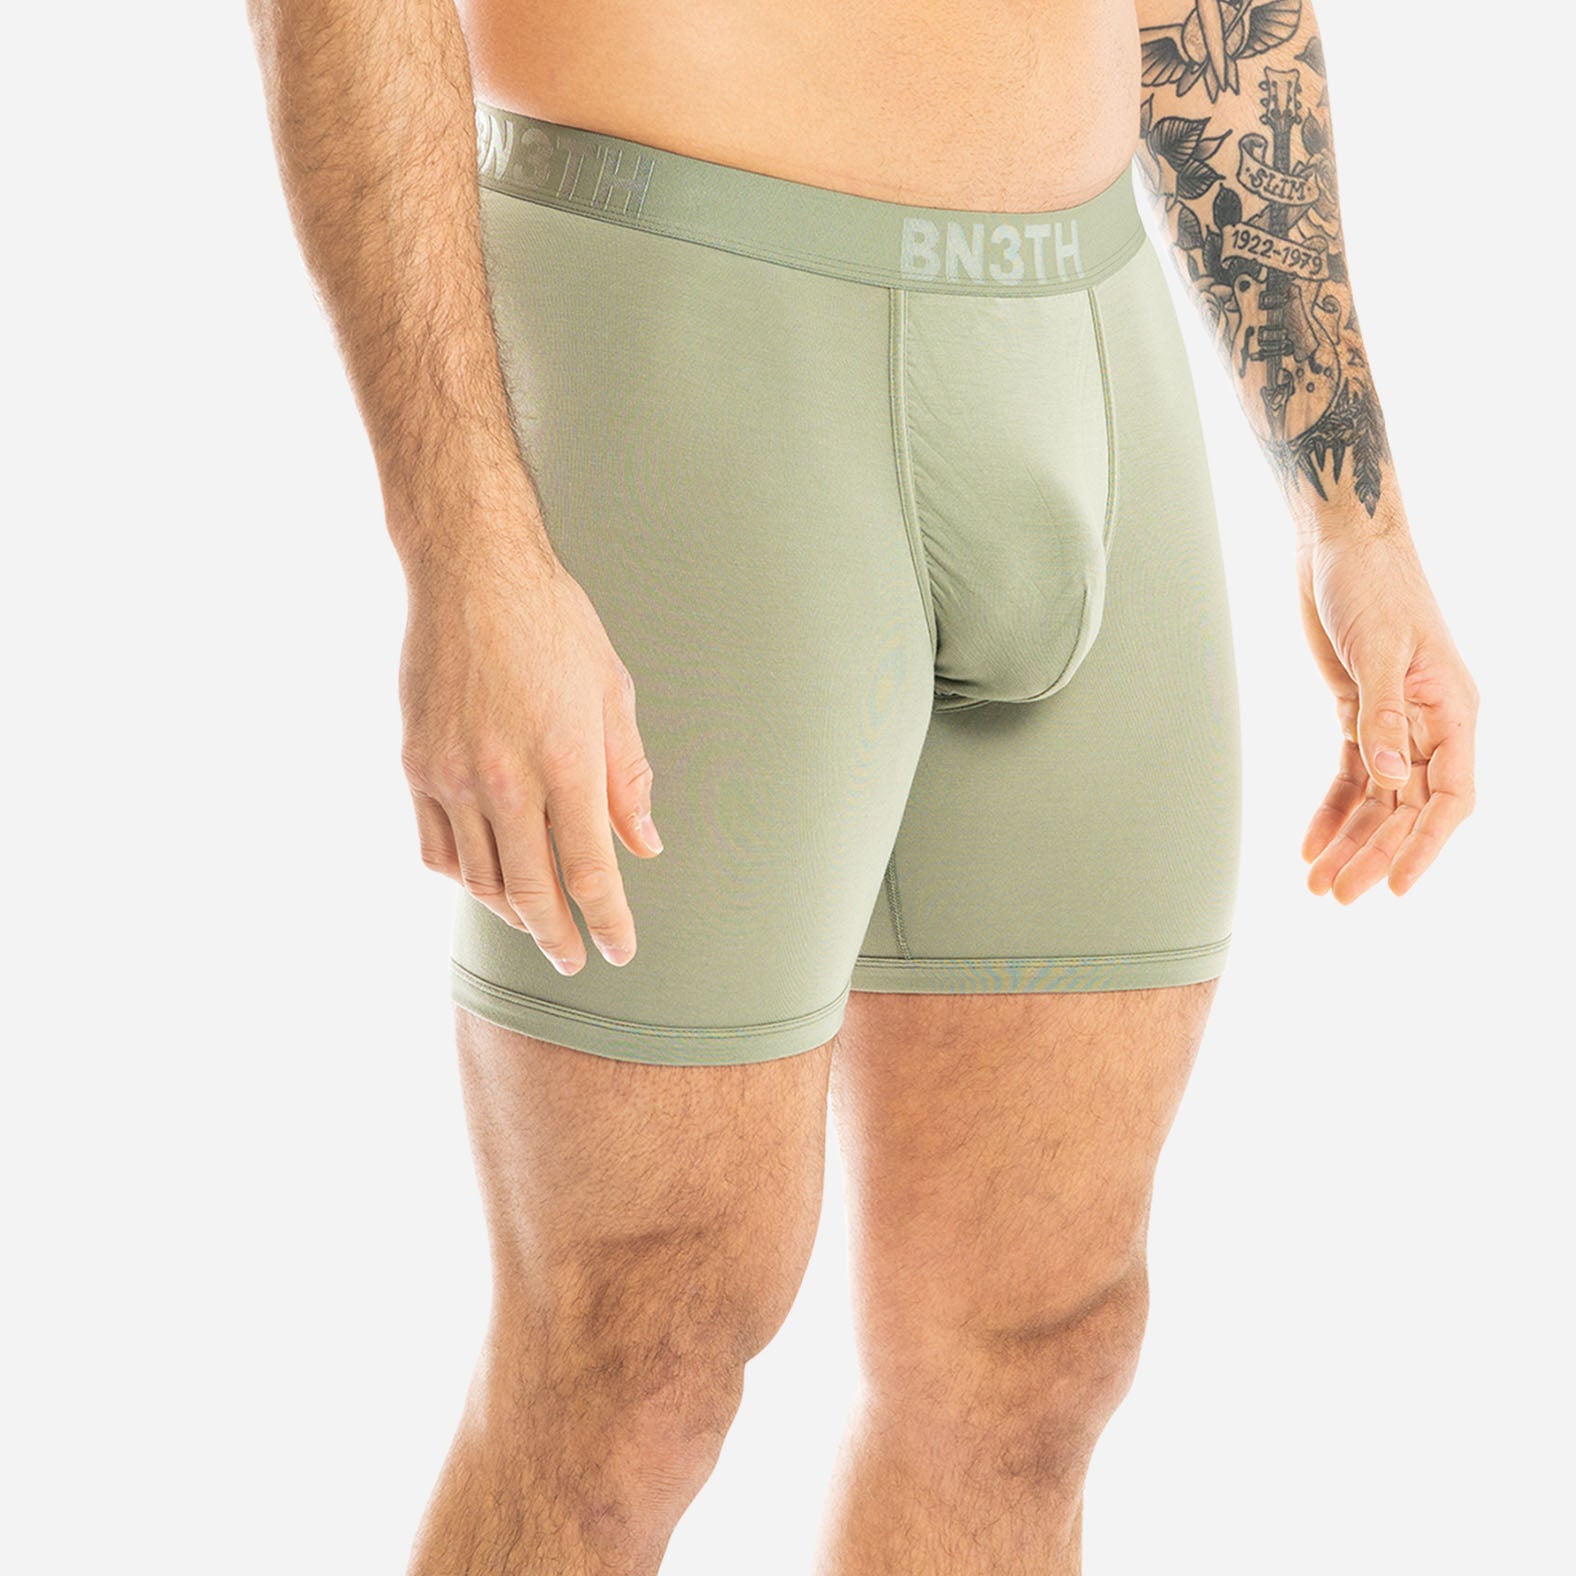 AEO Ultra Soft Boxer Short 3-Pack - Underwear